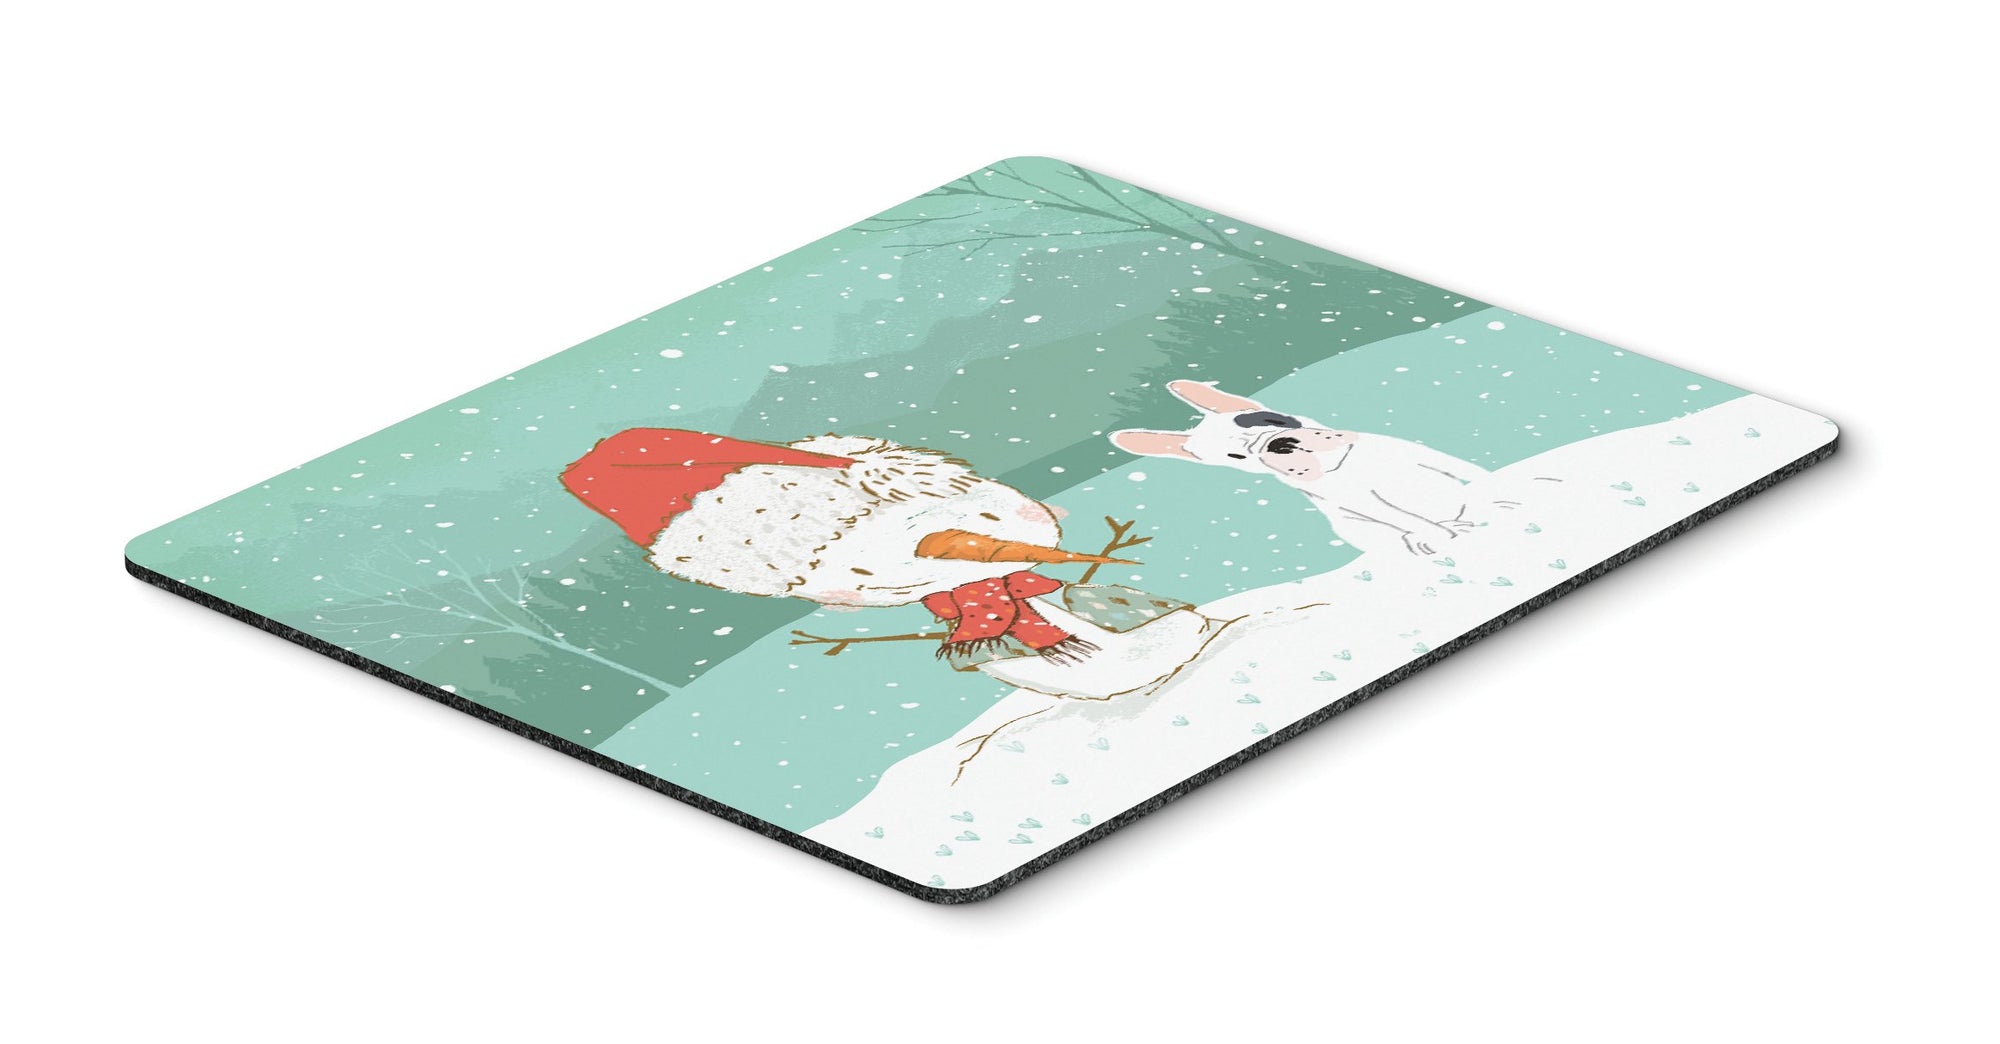 Piebald French Bulldog Snowman Christmas Mouse Pad, Hot Pad or Trivet CK2087MP by Caroline's Treasures